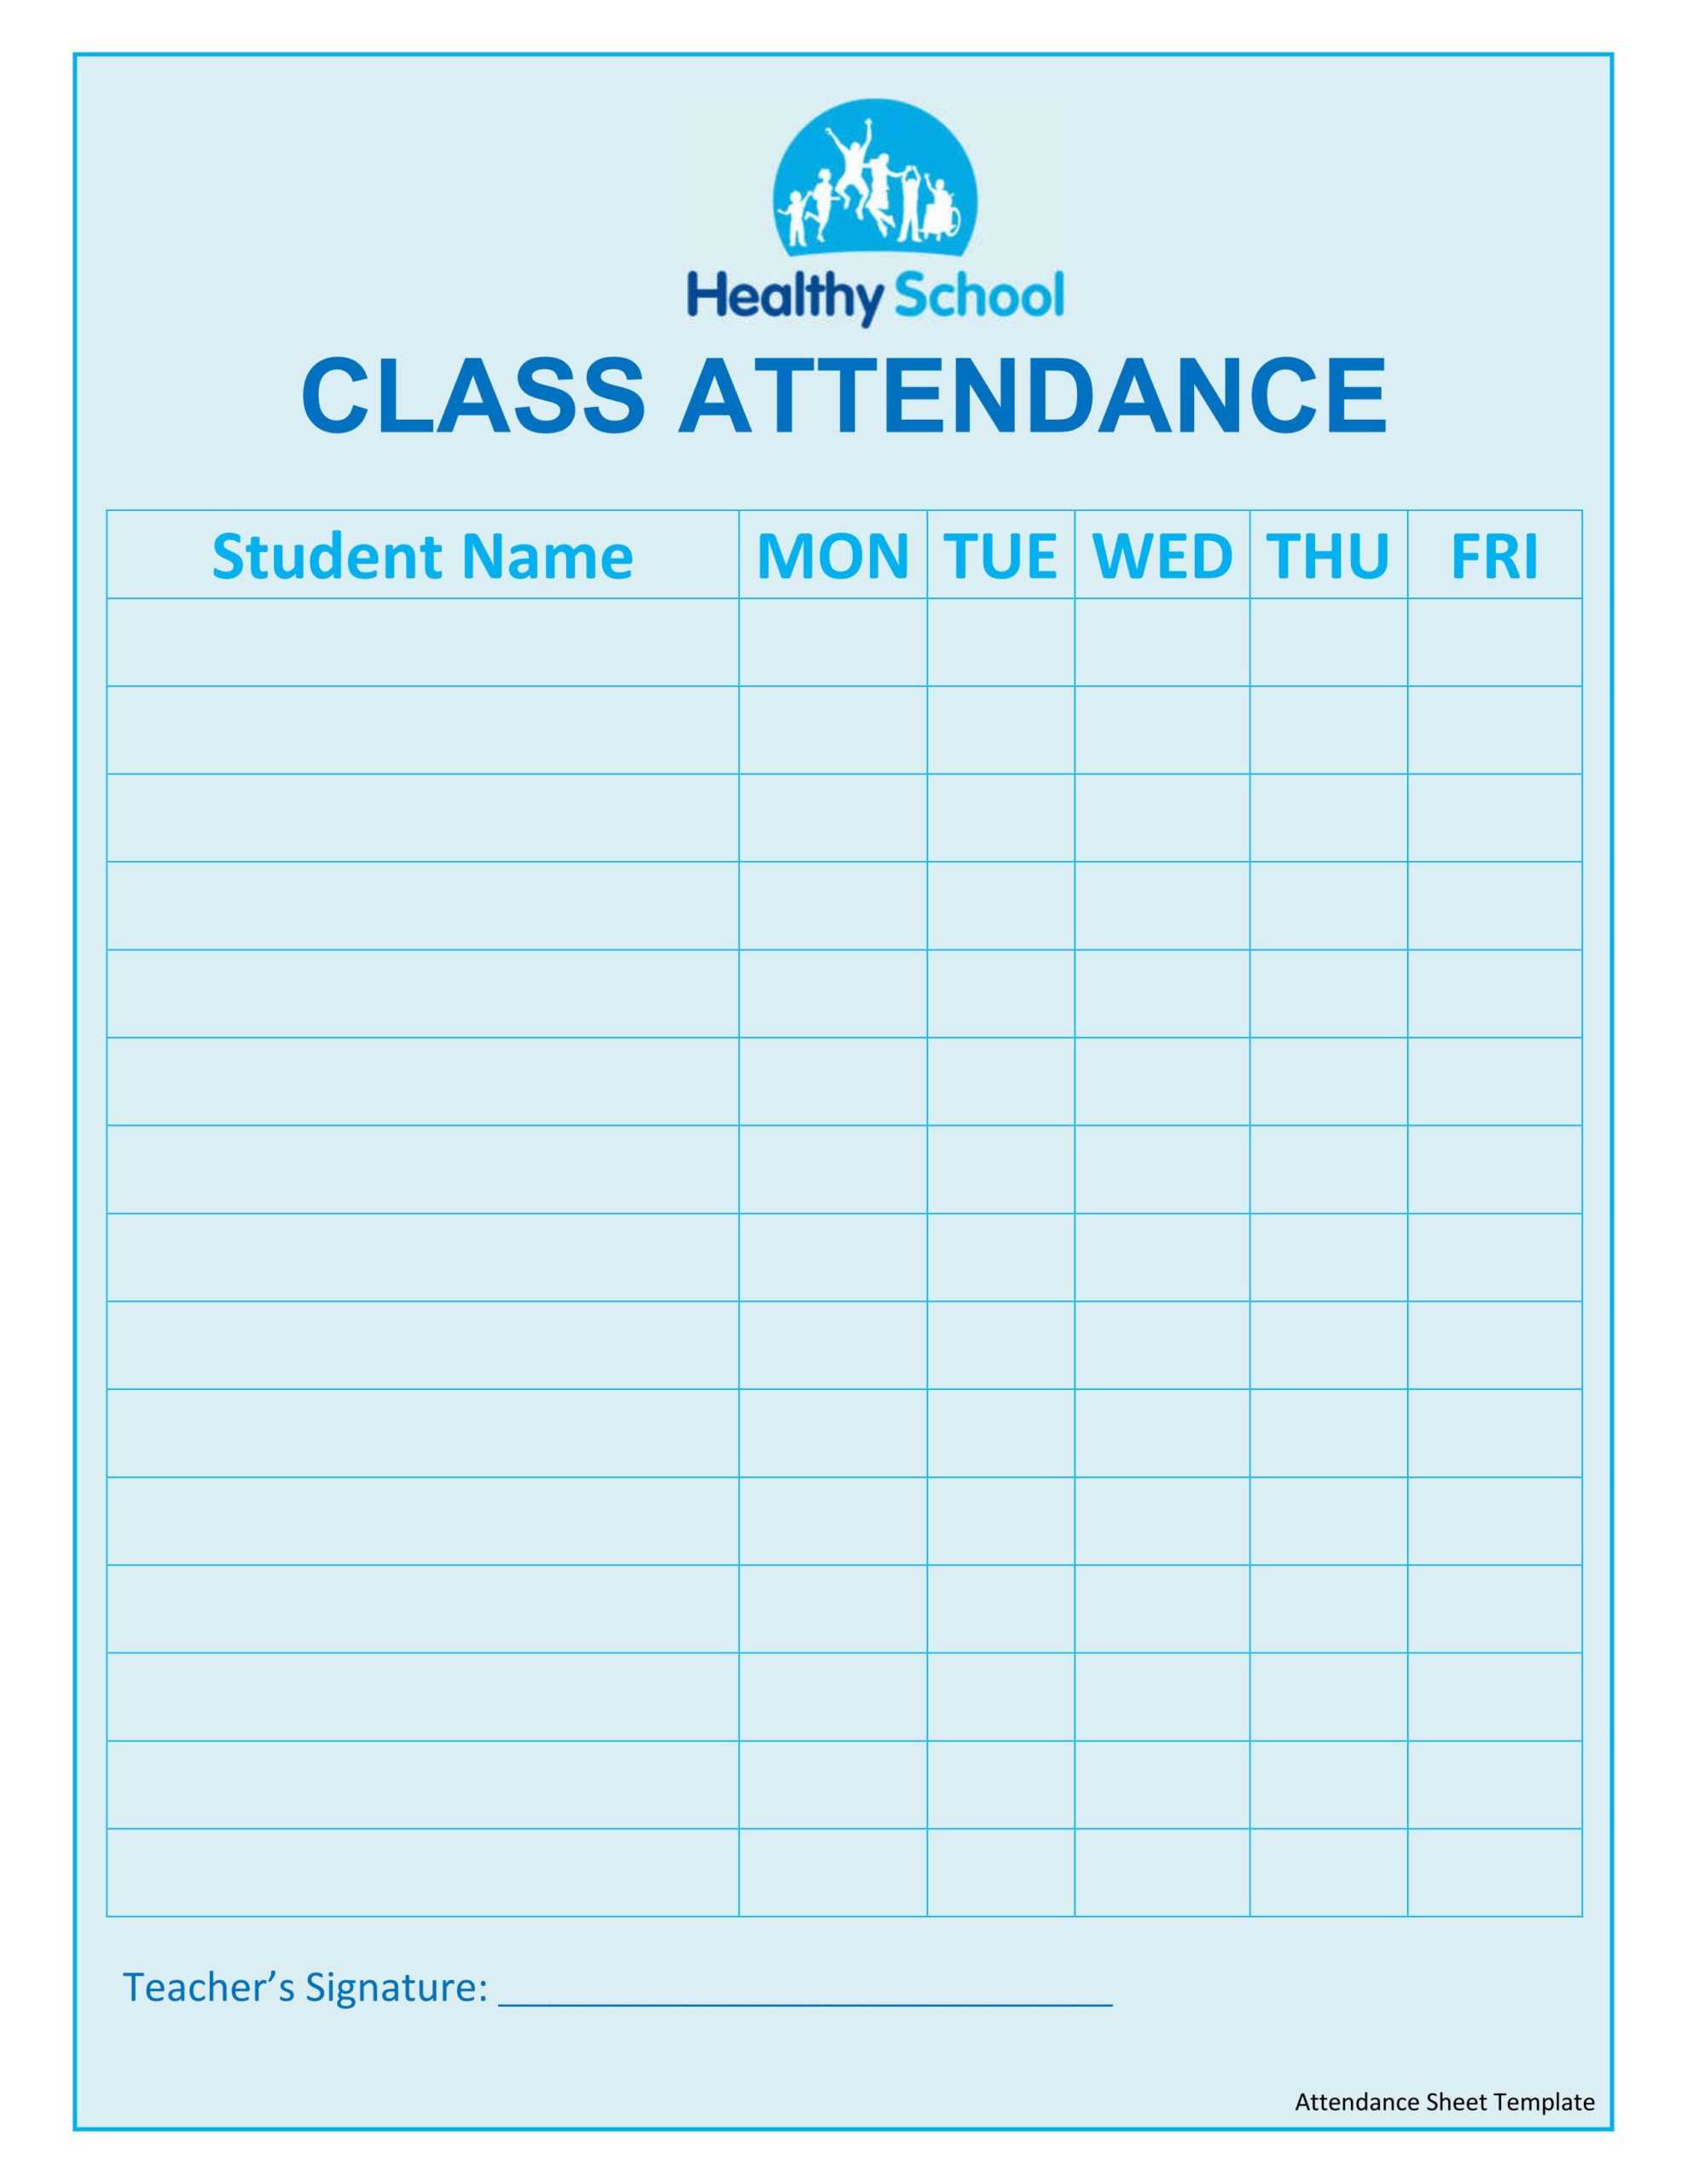 Attendance Sheet Template | Johannes Kr Pertaining To Student Information Card Template